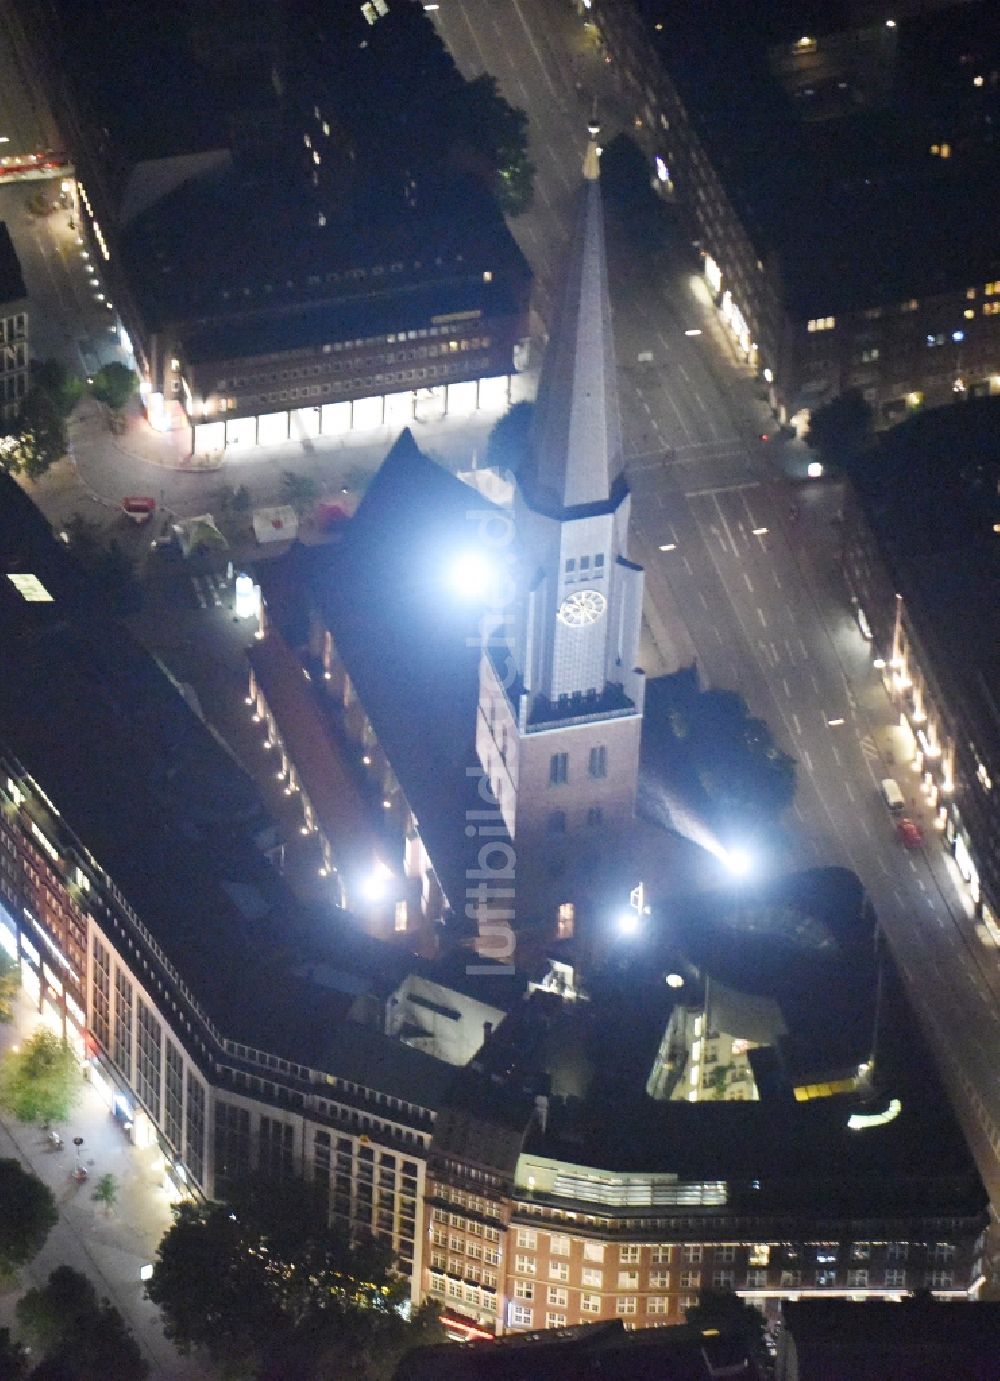 Nachtluftbild Hamburg - Nacht- Beleuchtung am Kirchengebäude der Hauptkirche St. Jacobi am Jakobikirchhof in Hamburg